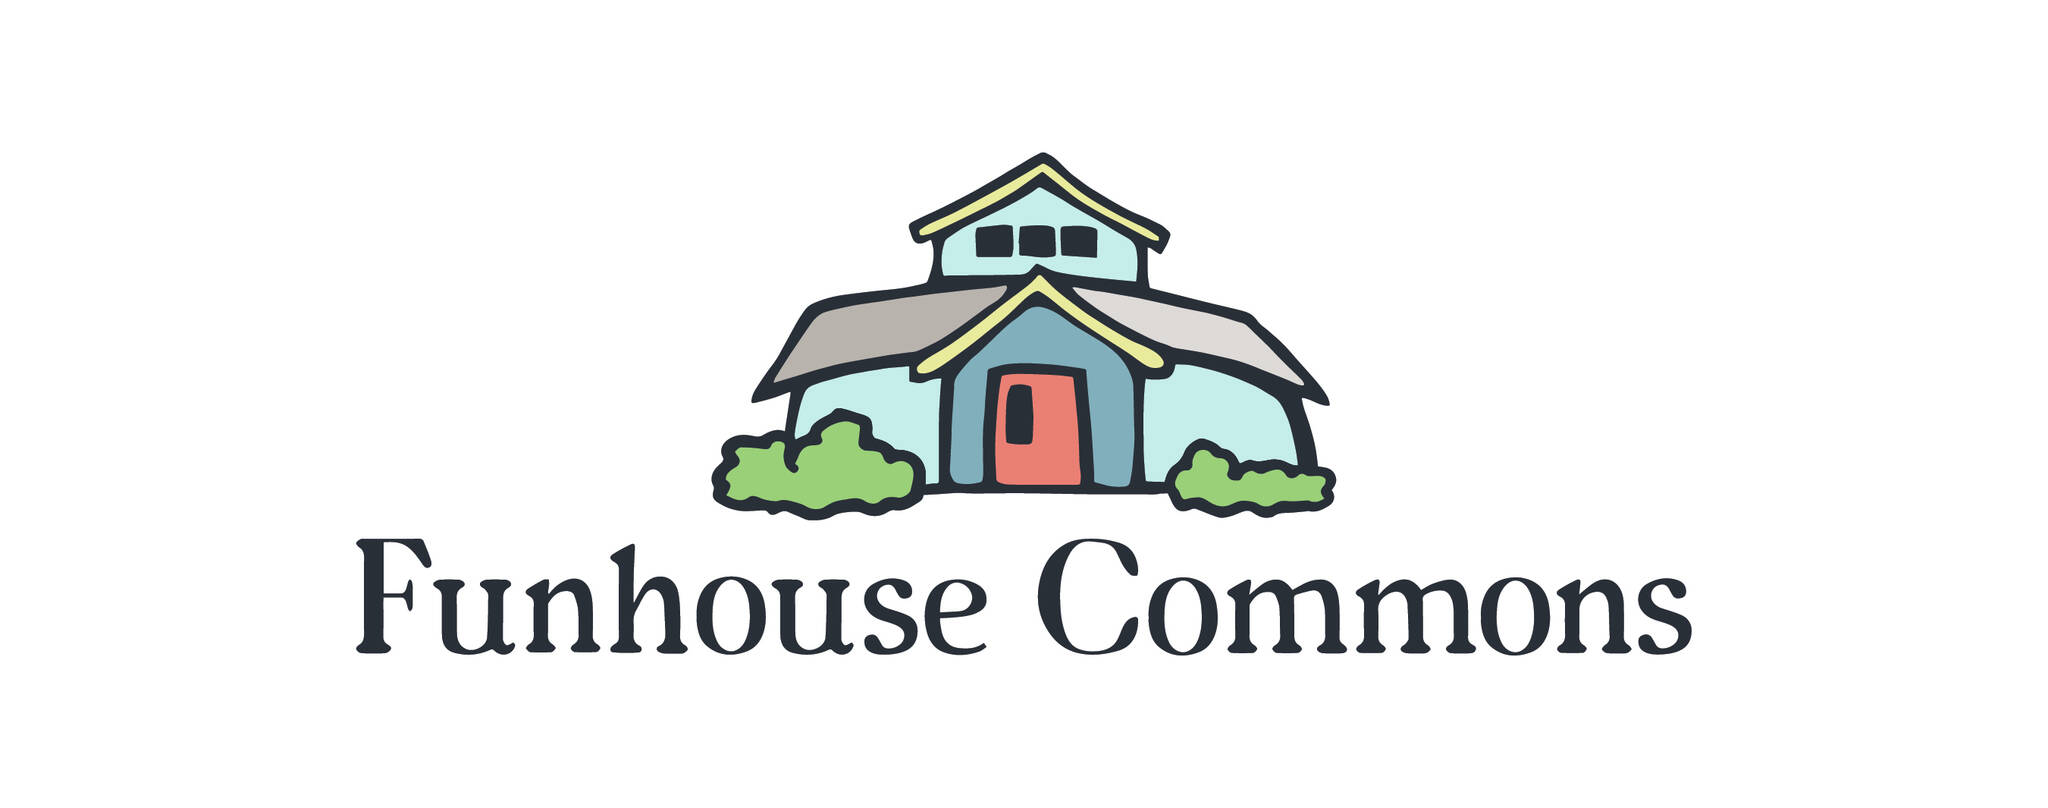 Funhouse Commons logo.